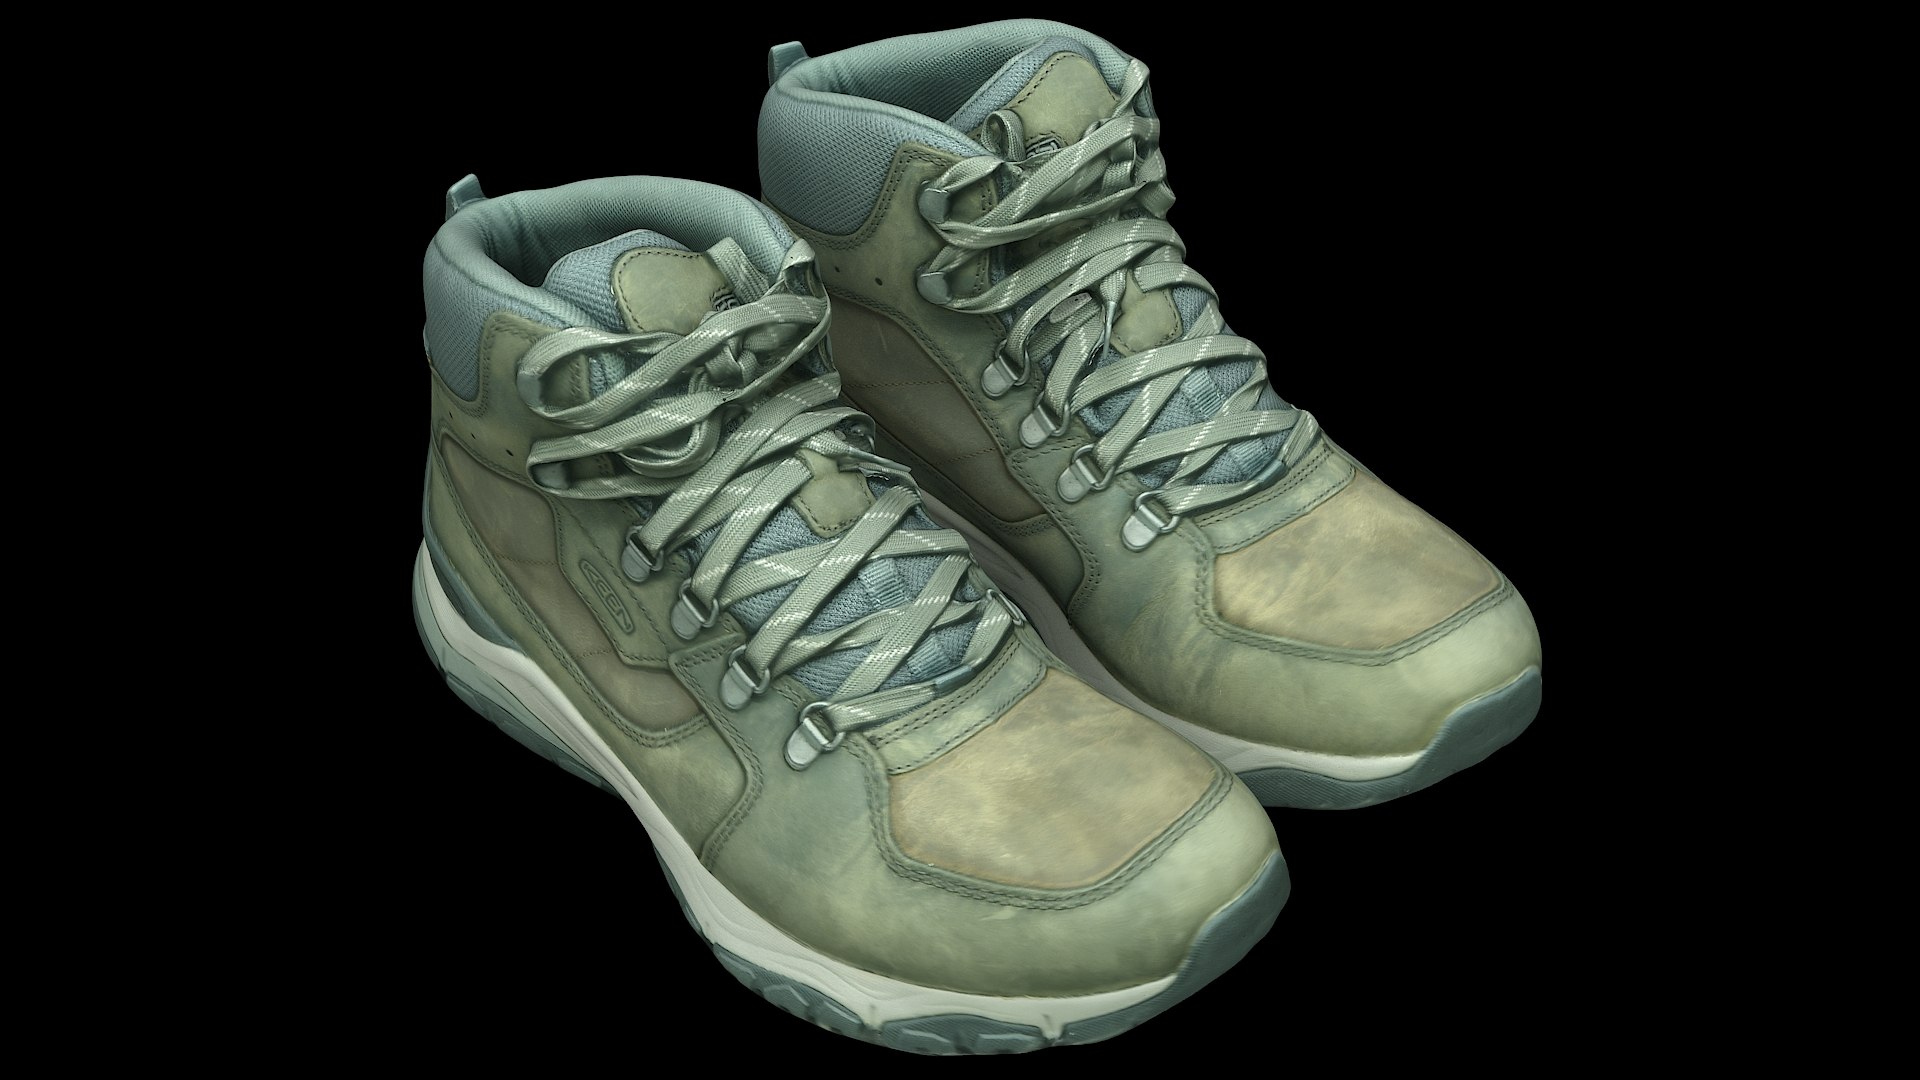 Hiking boots shoes 3D model - TurboSquid 1676950